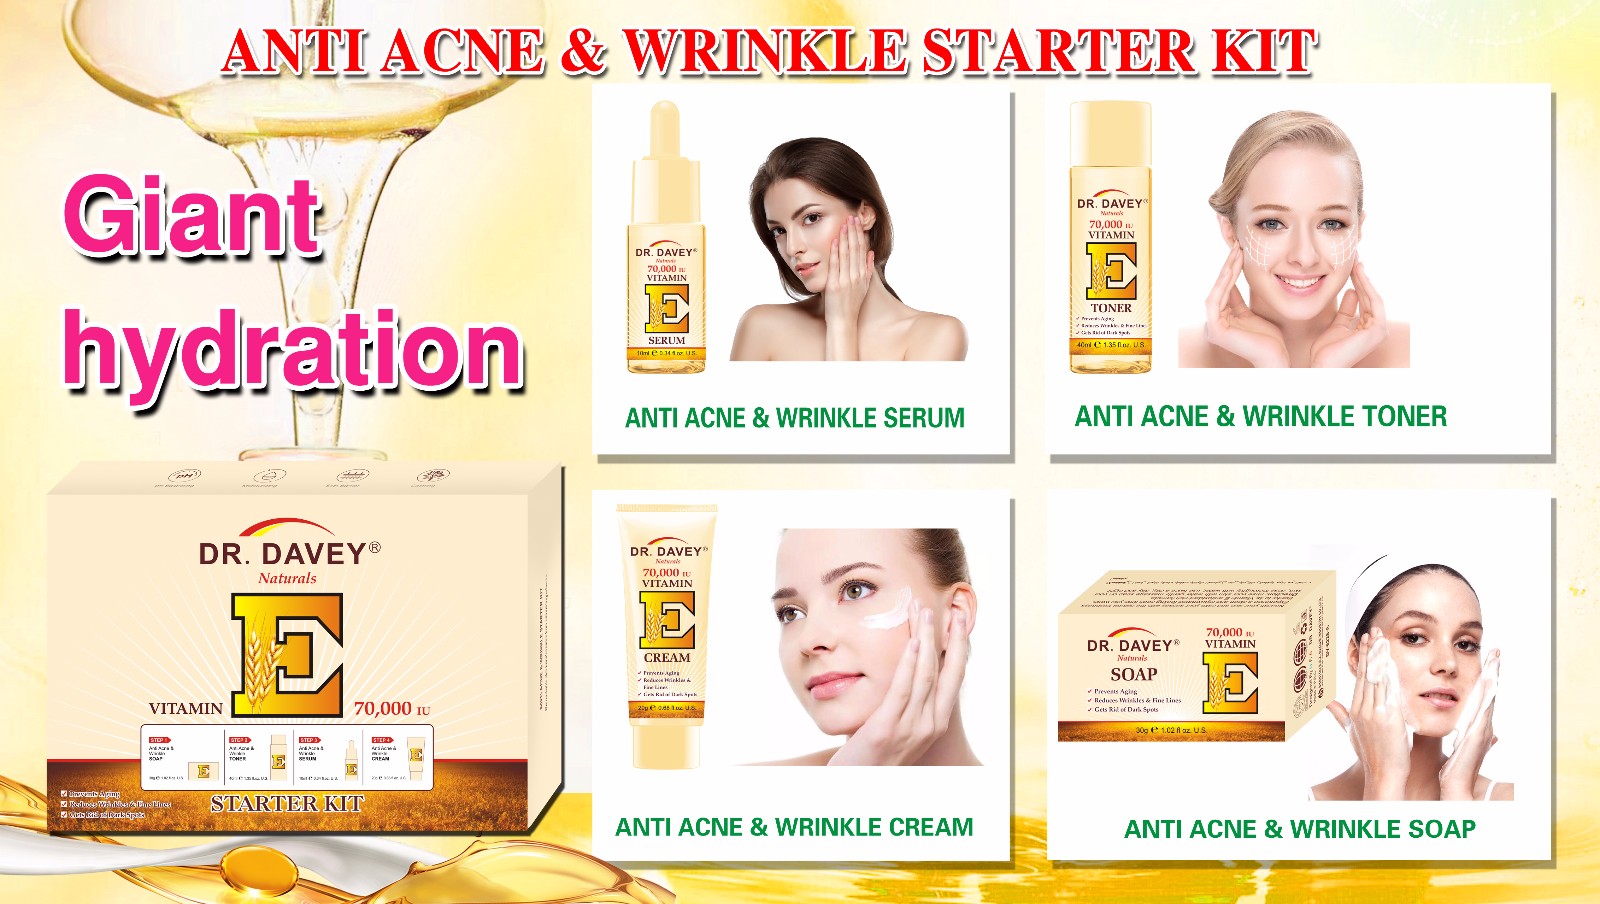 Vitamin E Skin Care Set